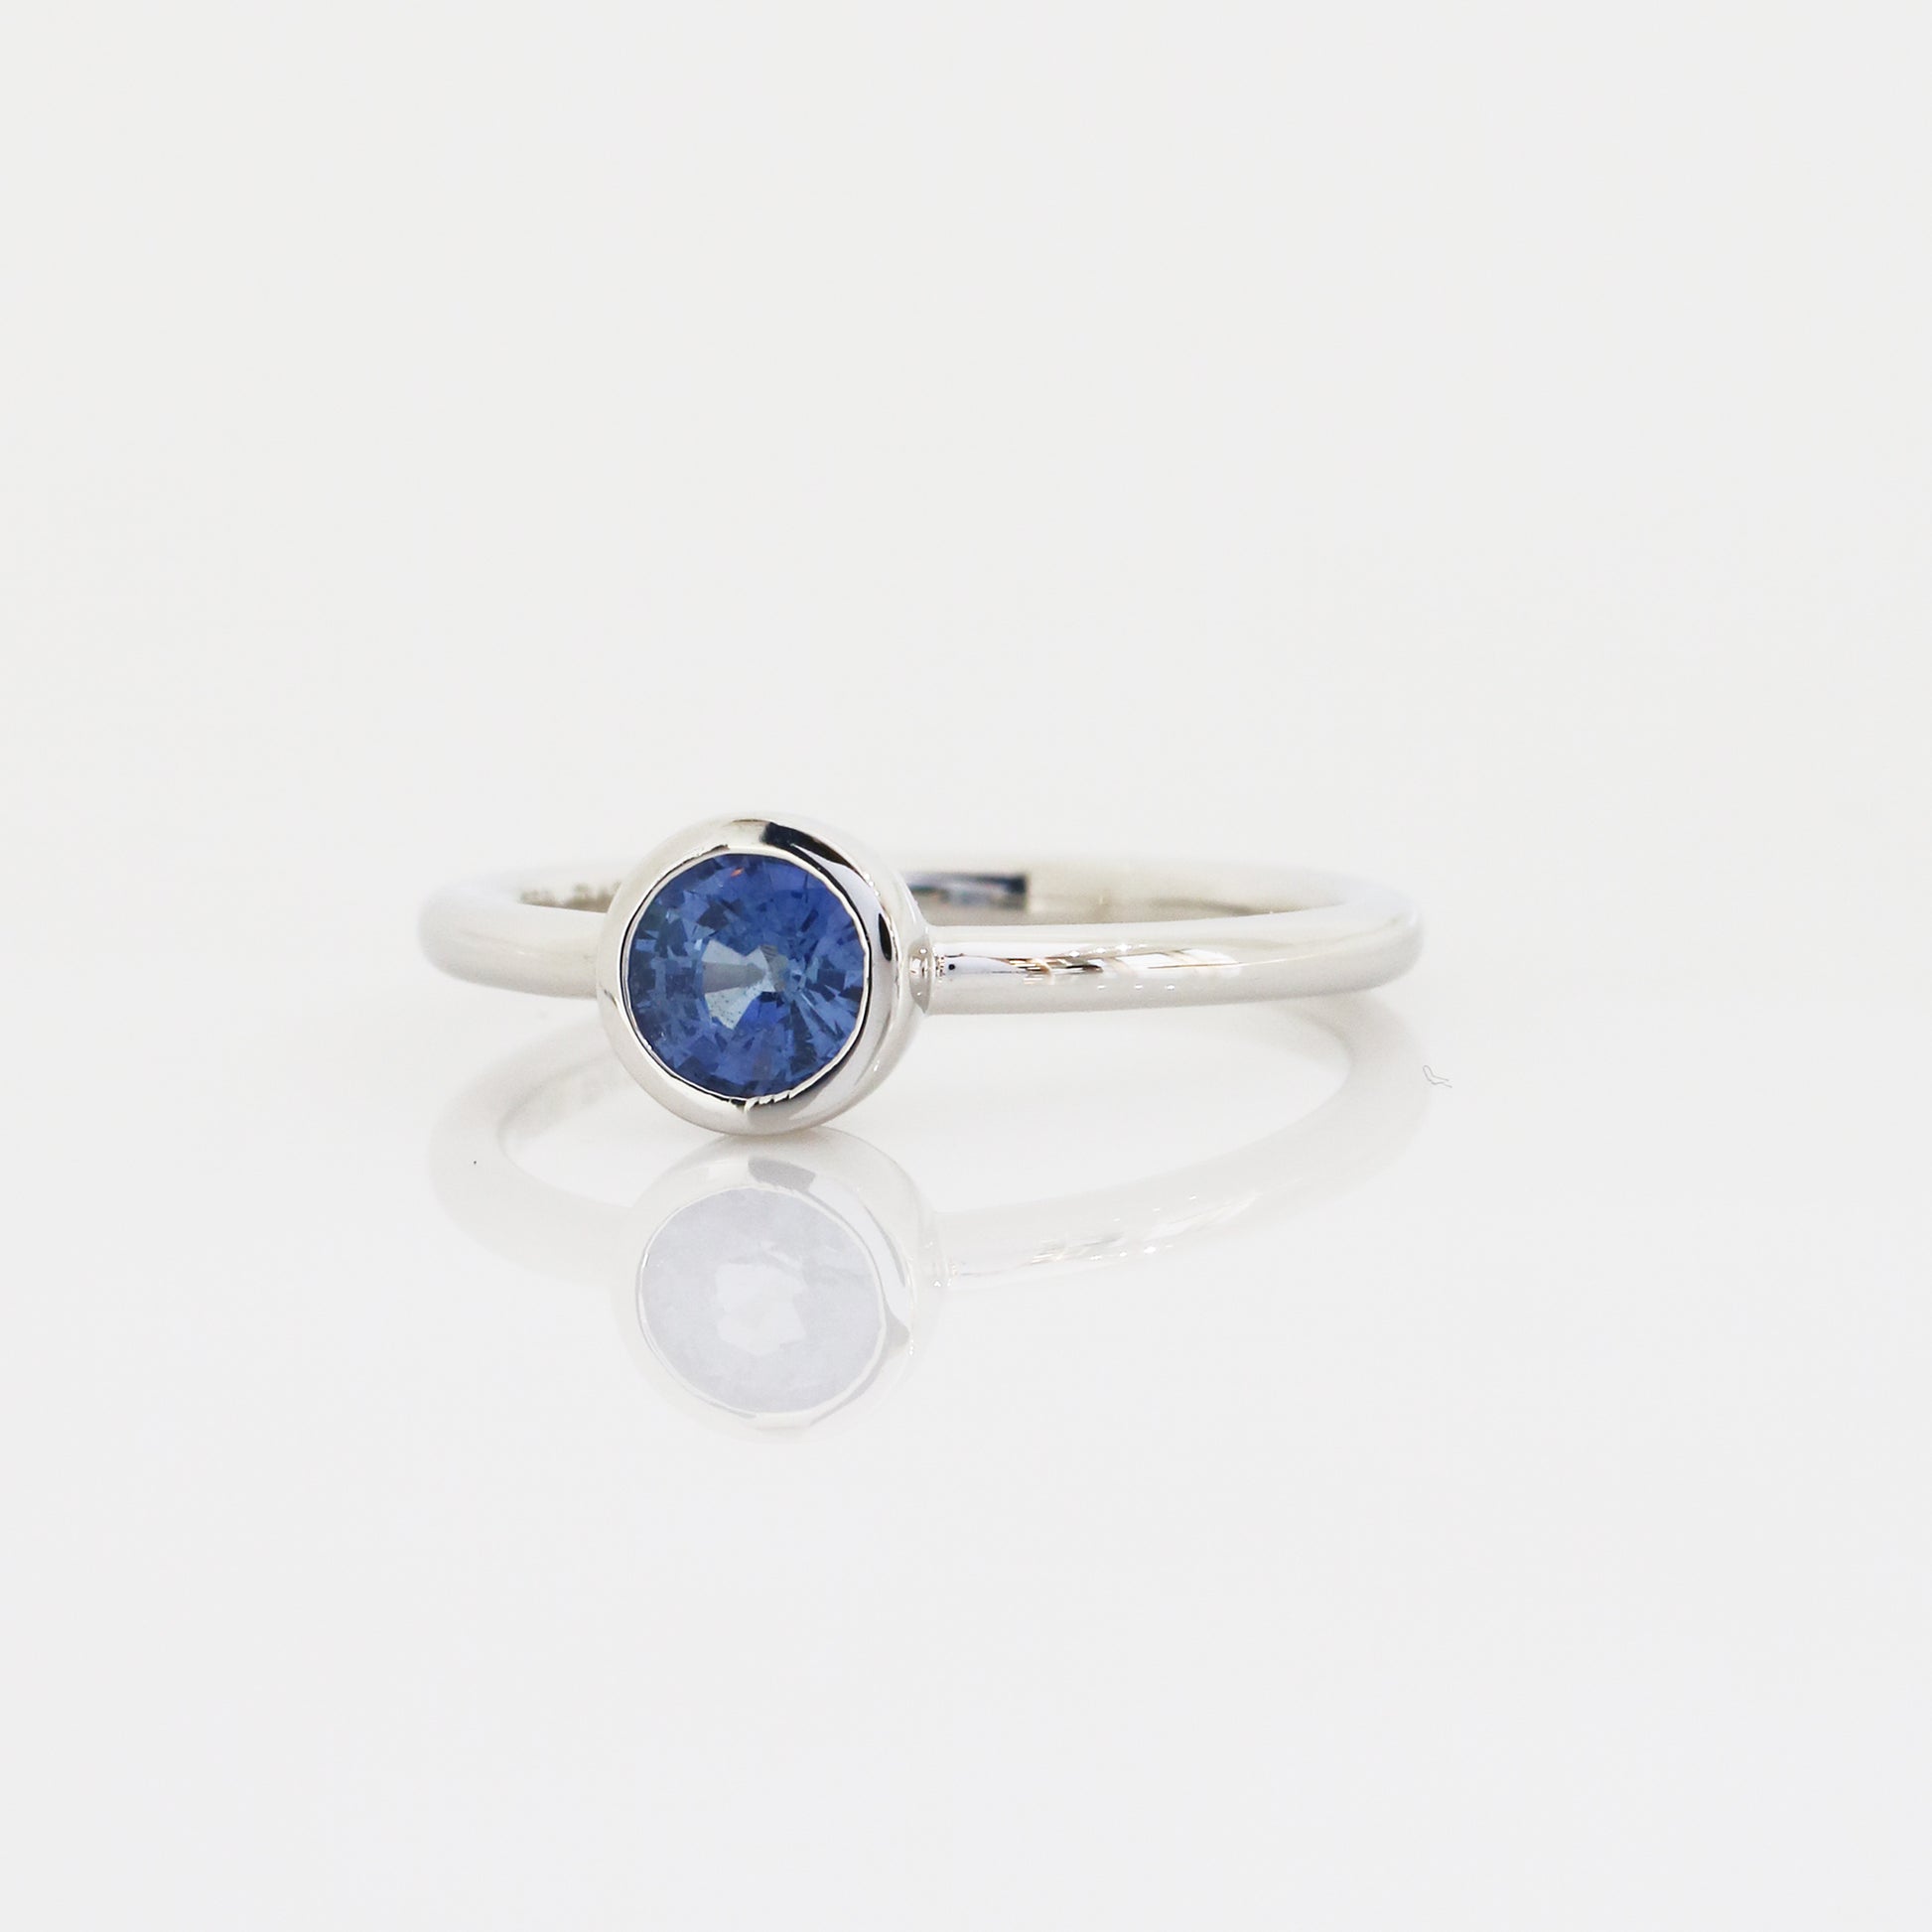 18k白金包邊鑲藍寶石戒指側面 18k White Gold Bezel-Set Sapphire Ring on side view